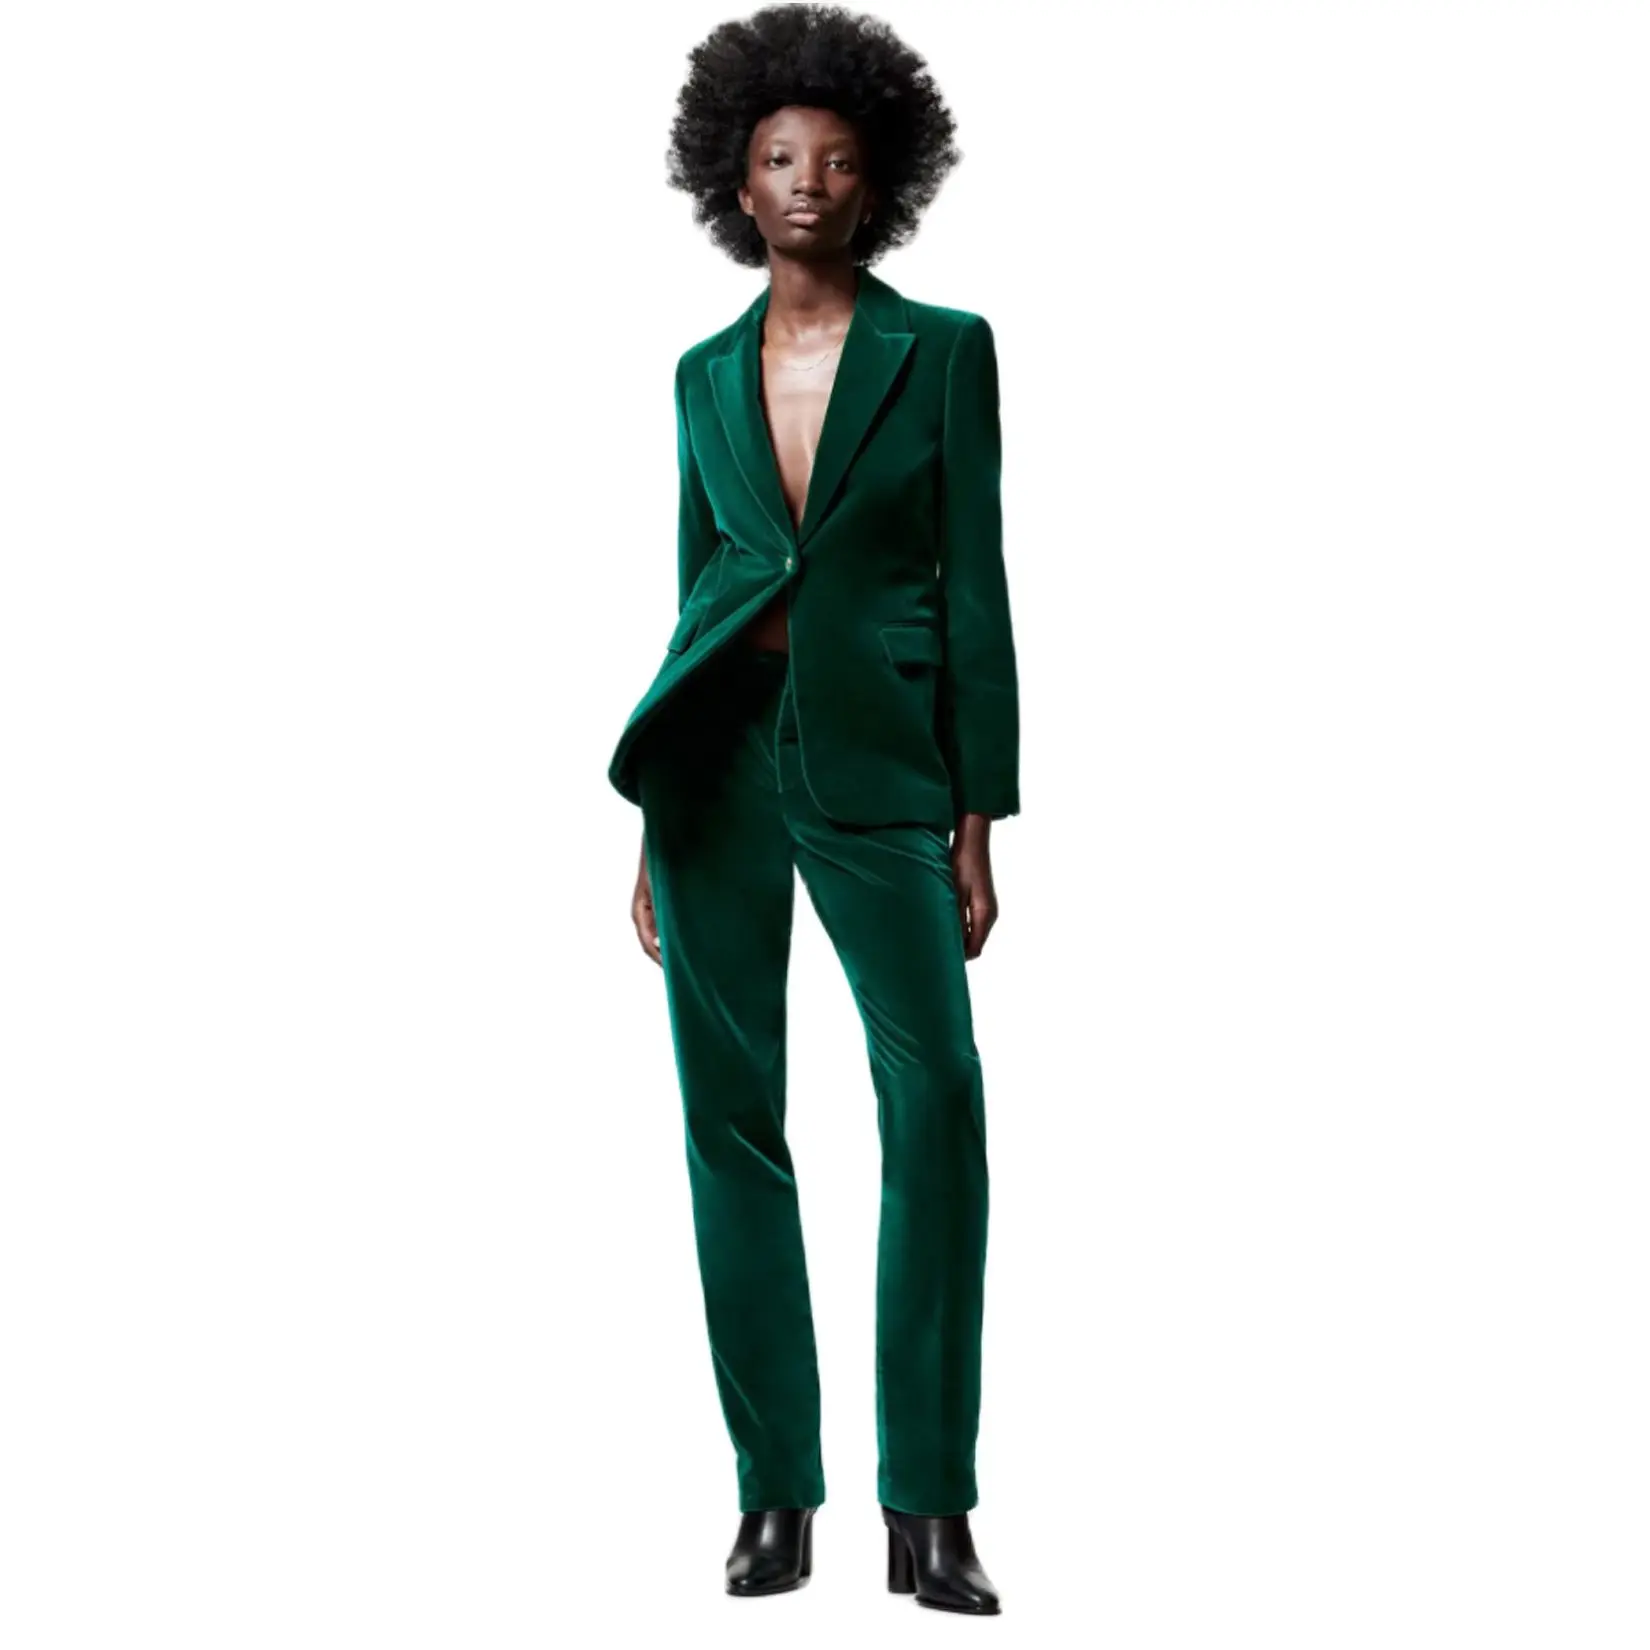 Women's 2-Piece Velvet Suit Business Work Wear Office Slim Fit Jacket Warm Blazer + Pants Set